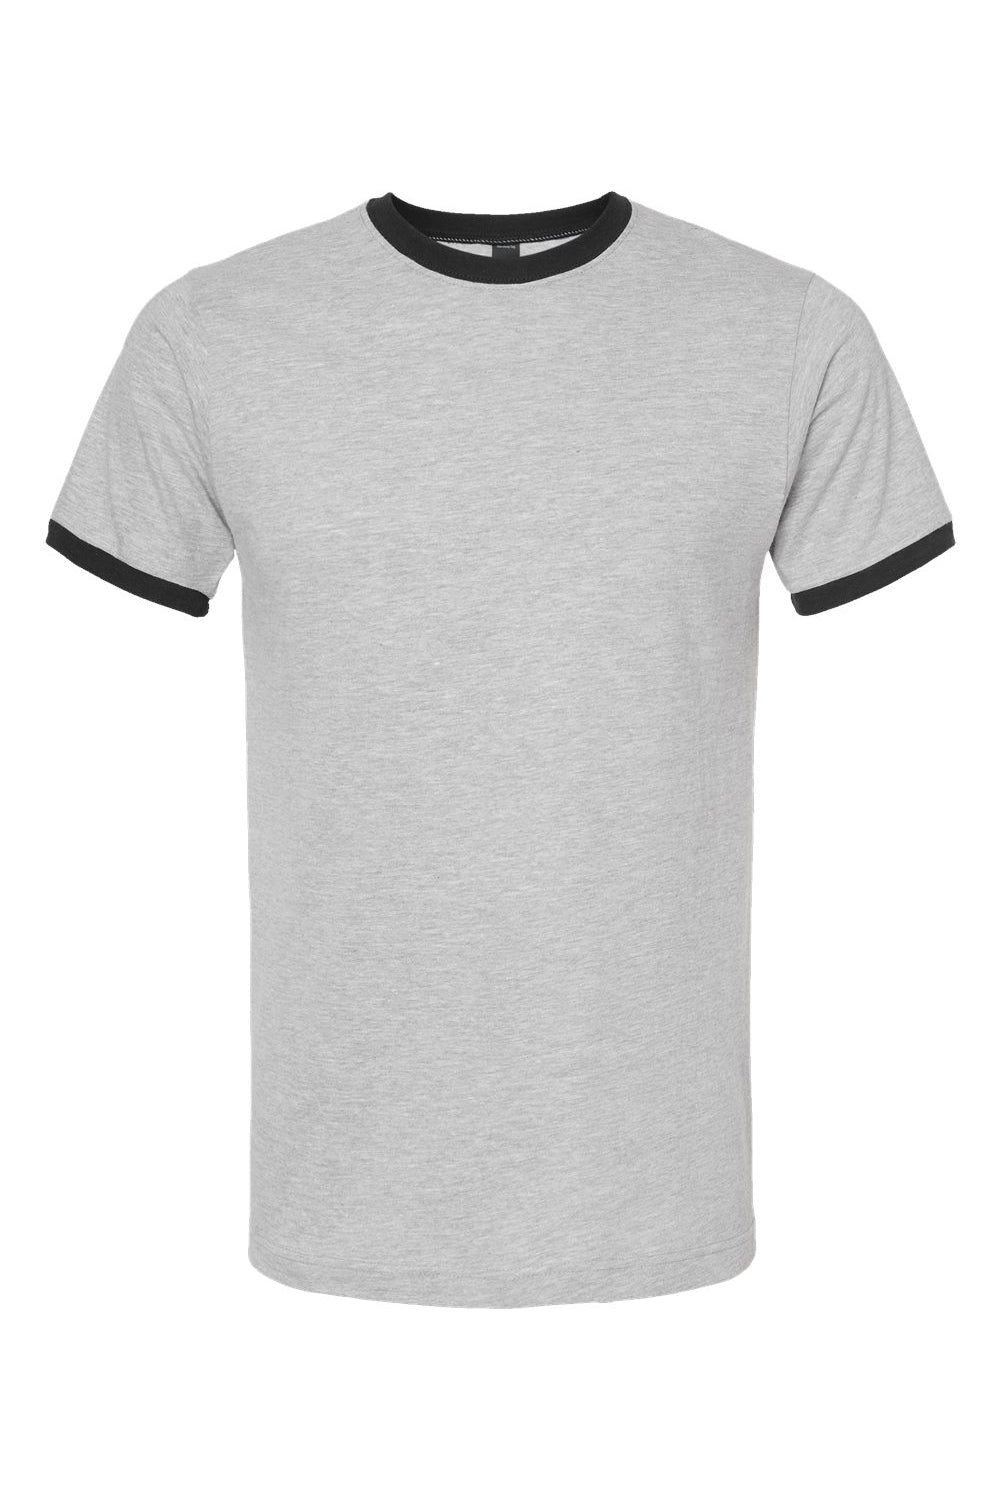 Tultex 246 Mens Fine Jersey Ringer Short Sleeve Crewneck T-Shirt Heather Grey/Black Flat Front